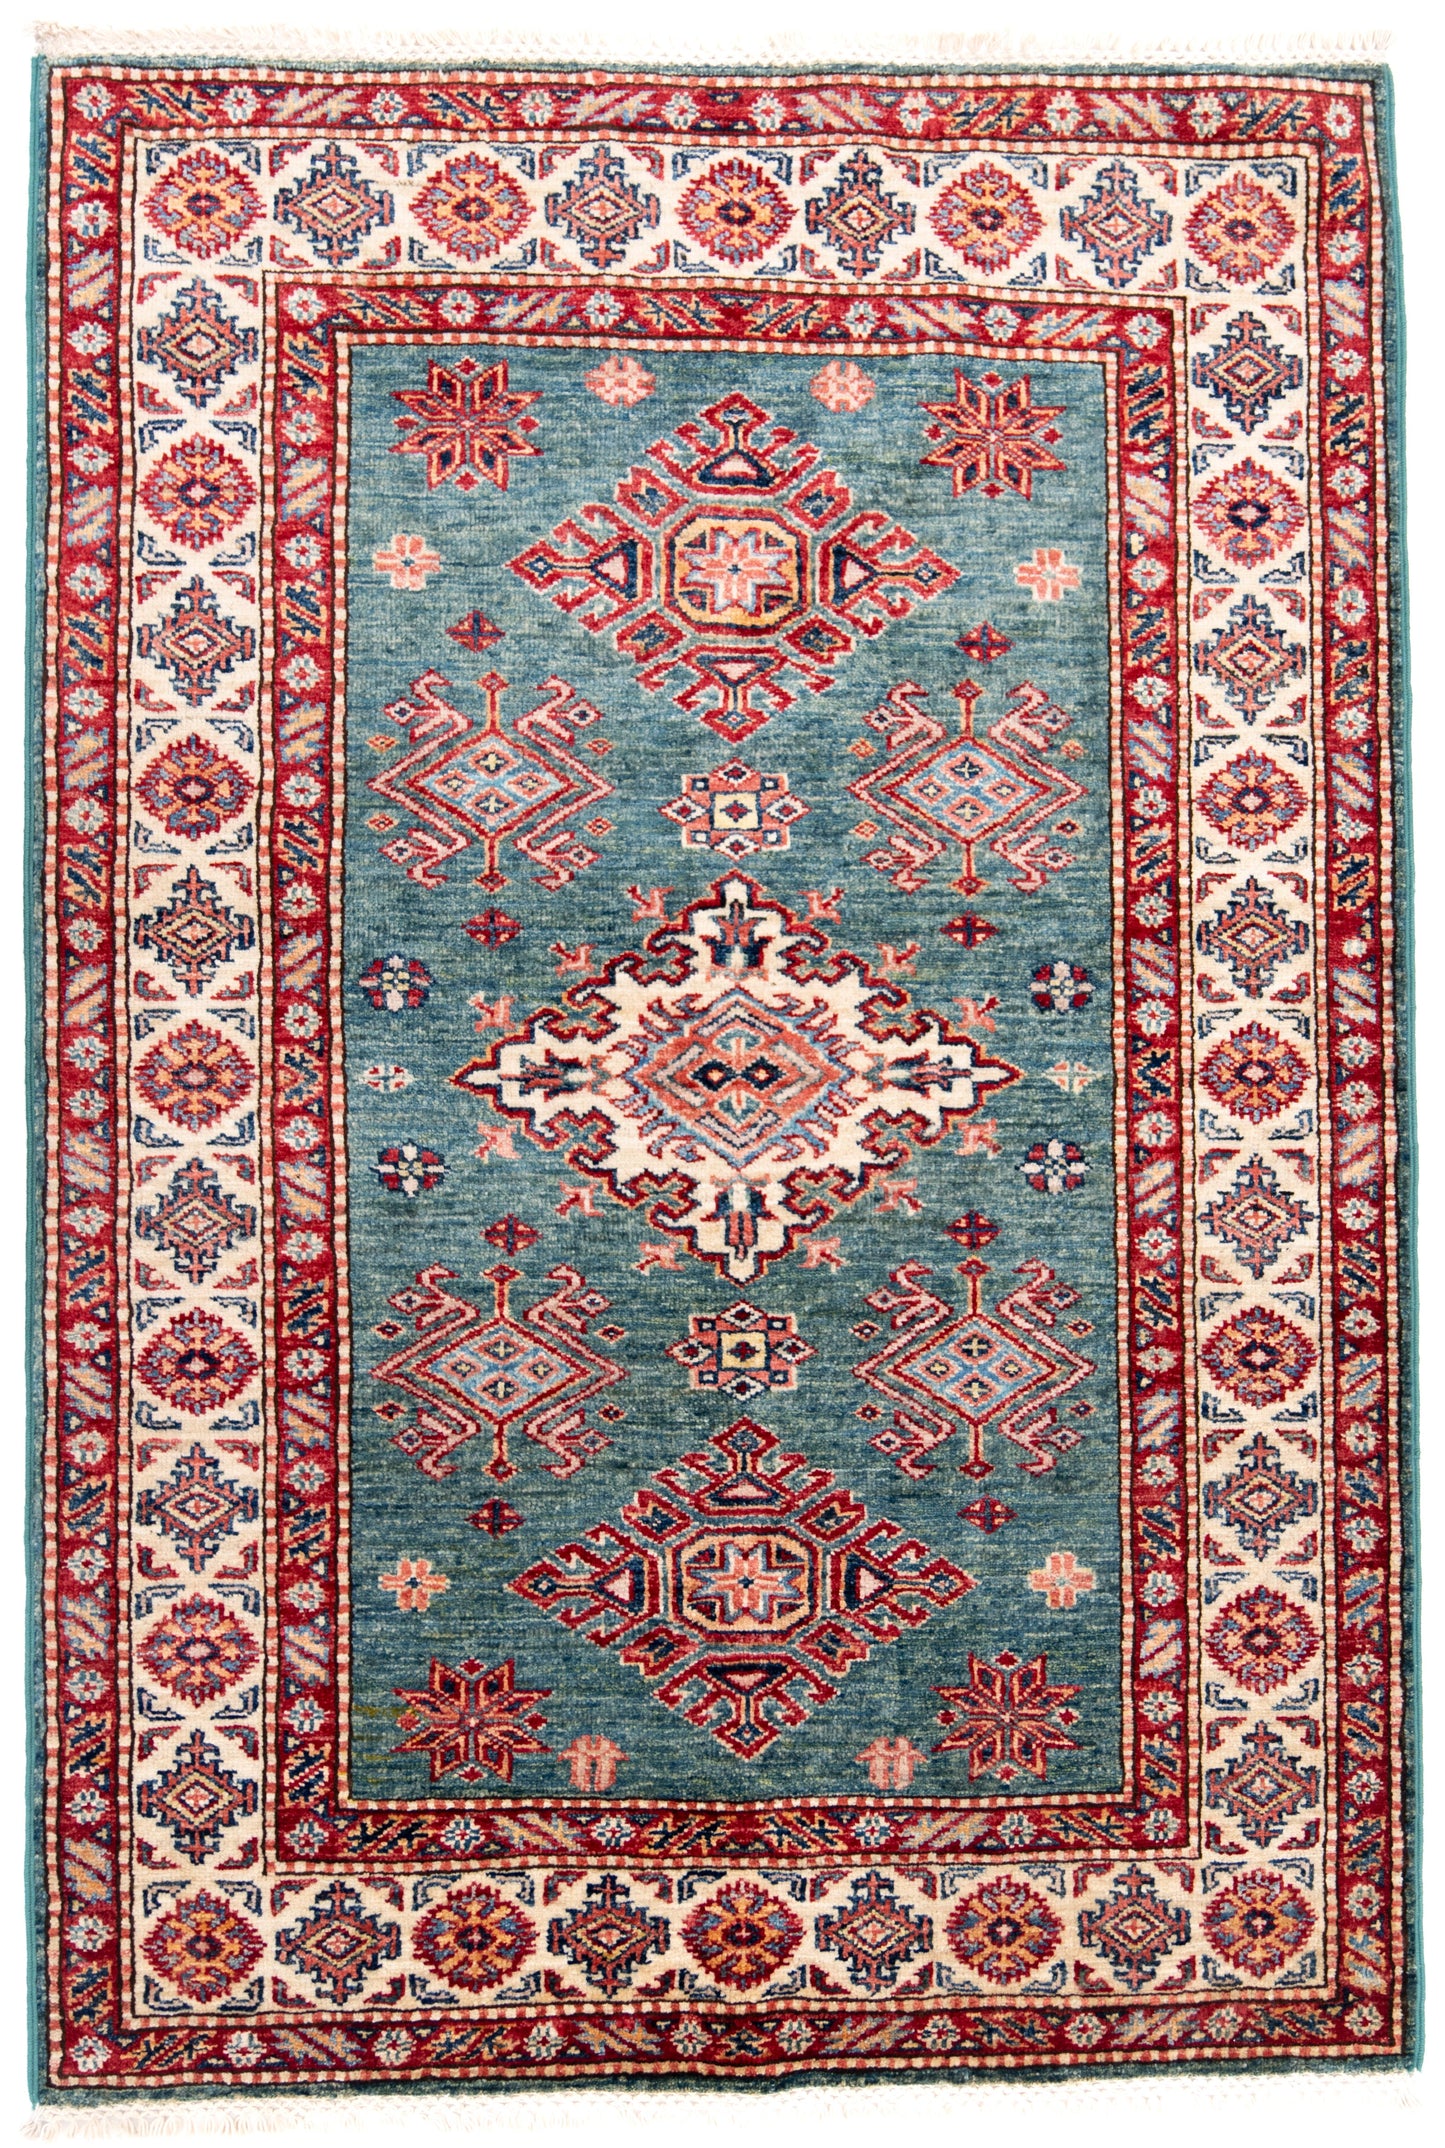 Green Kazak Carpet with Red & Cream Borders